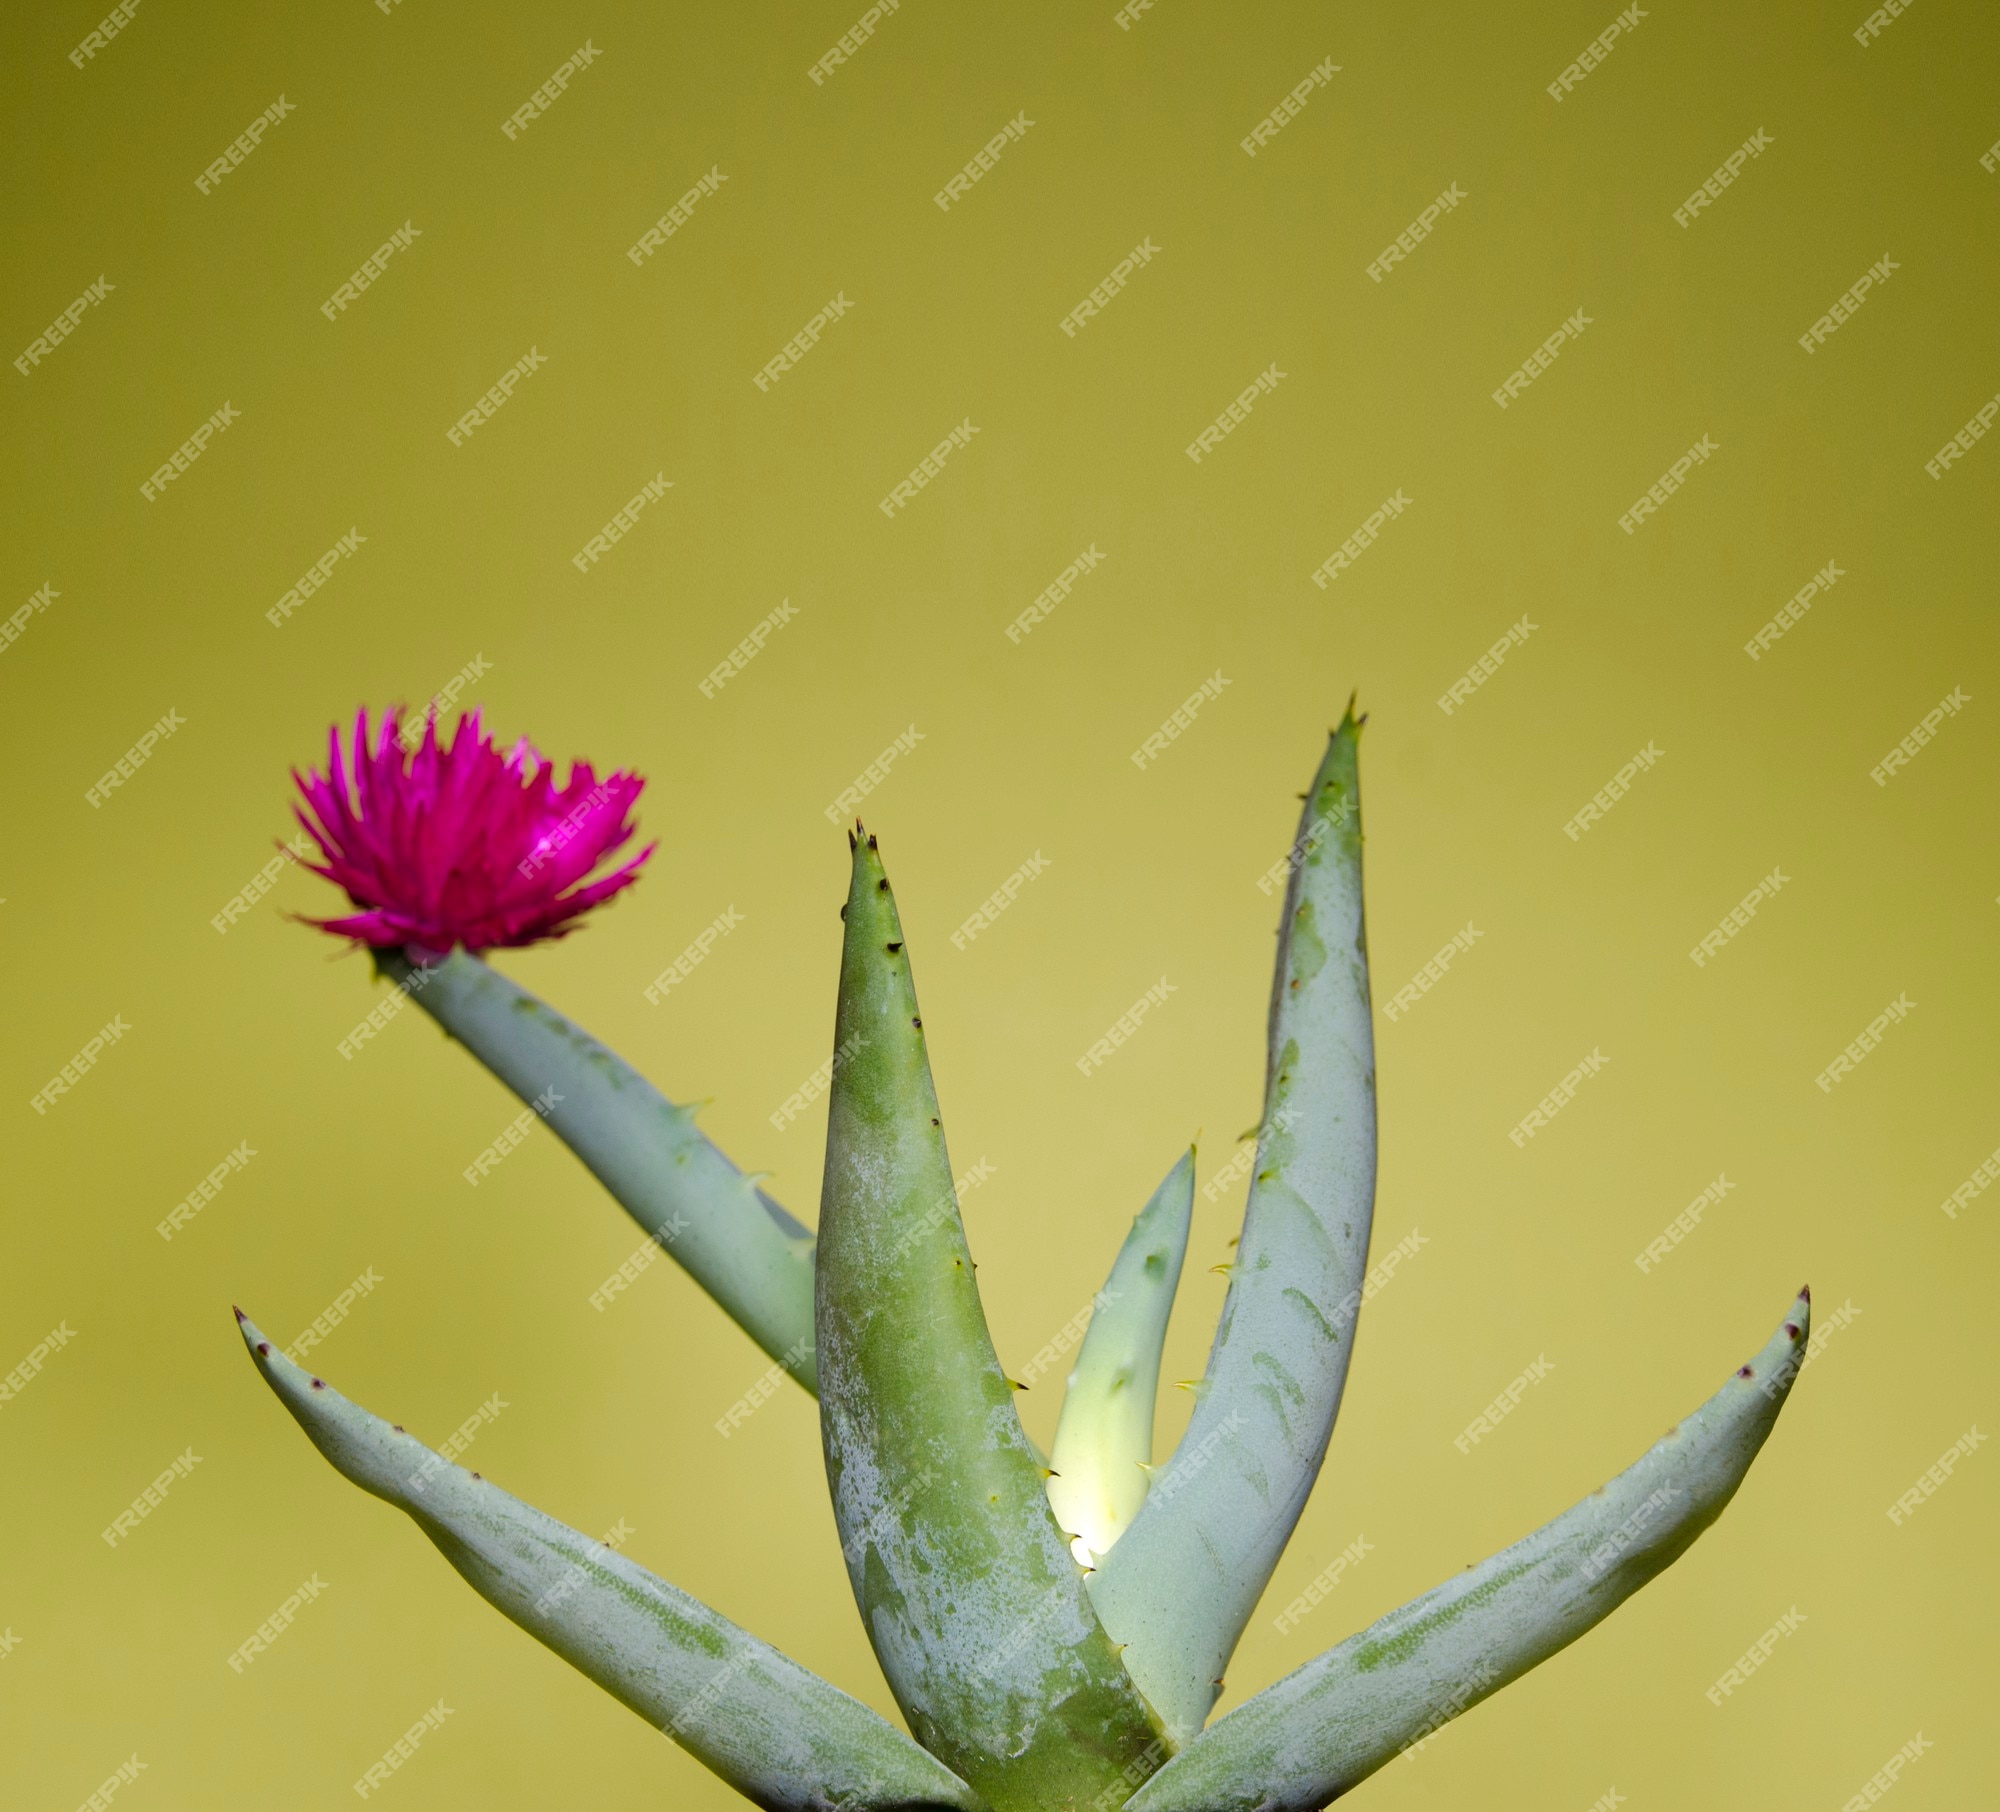 Premium Photo | Aloe vera flower on green plant with pastel background